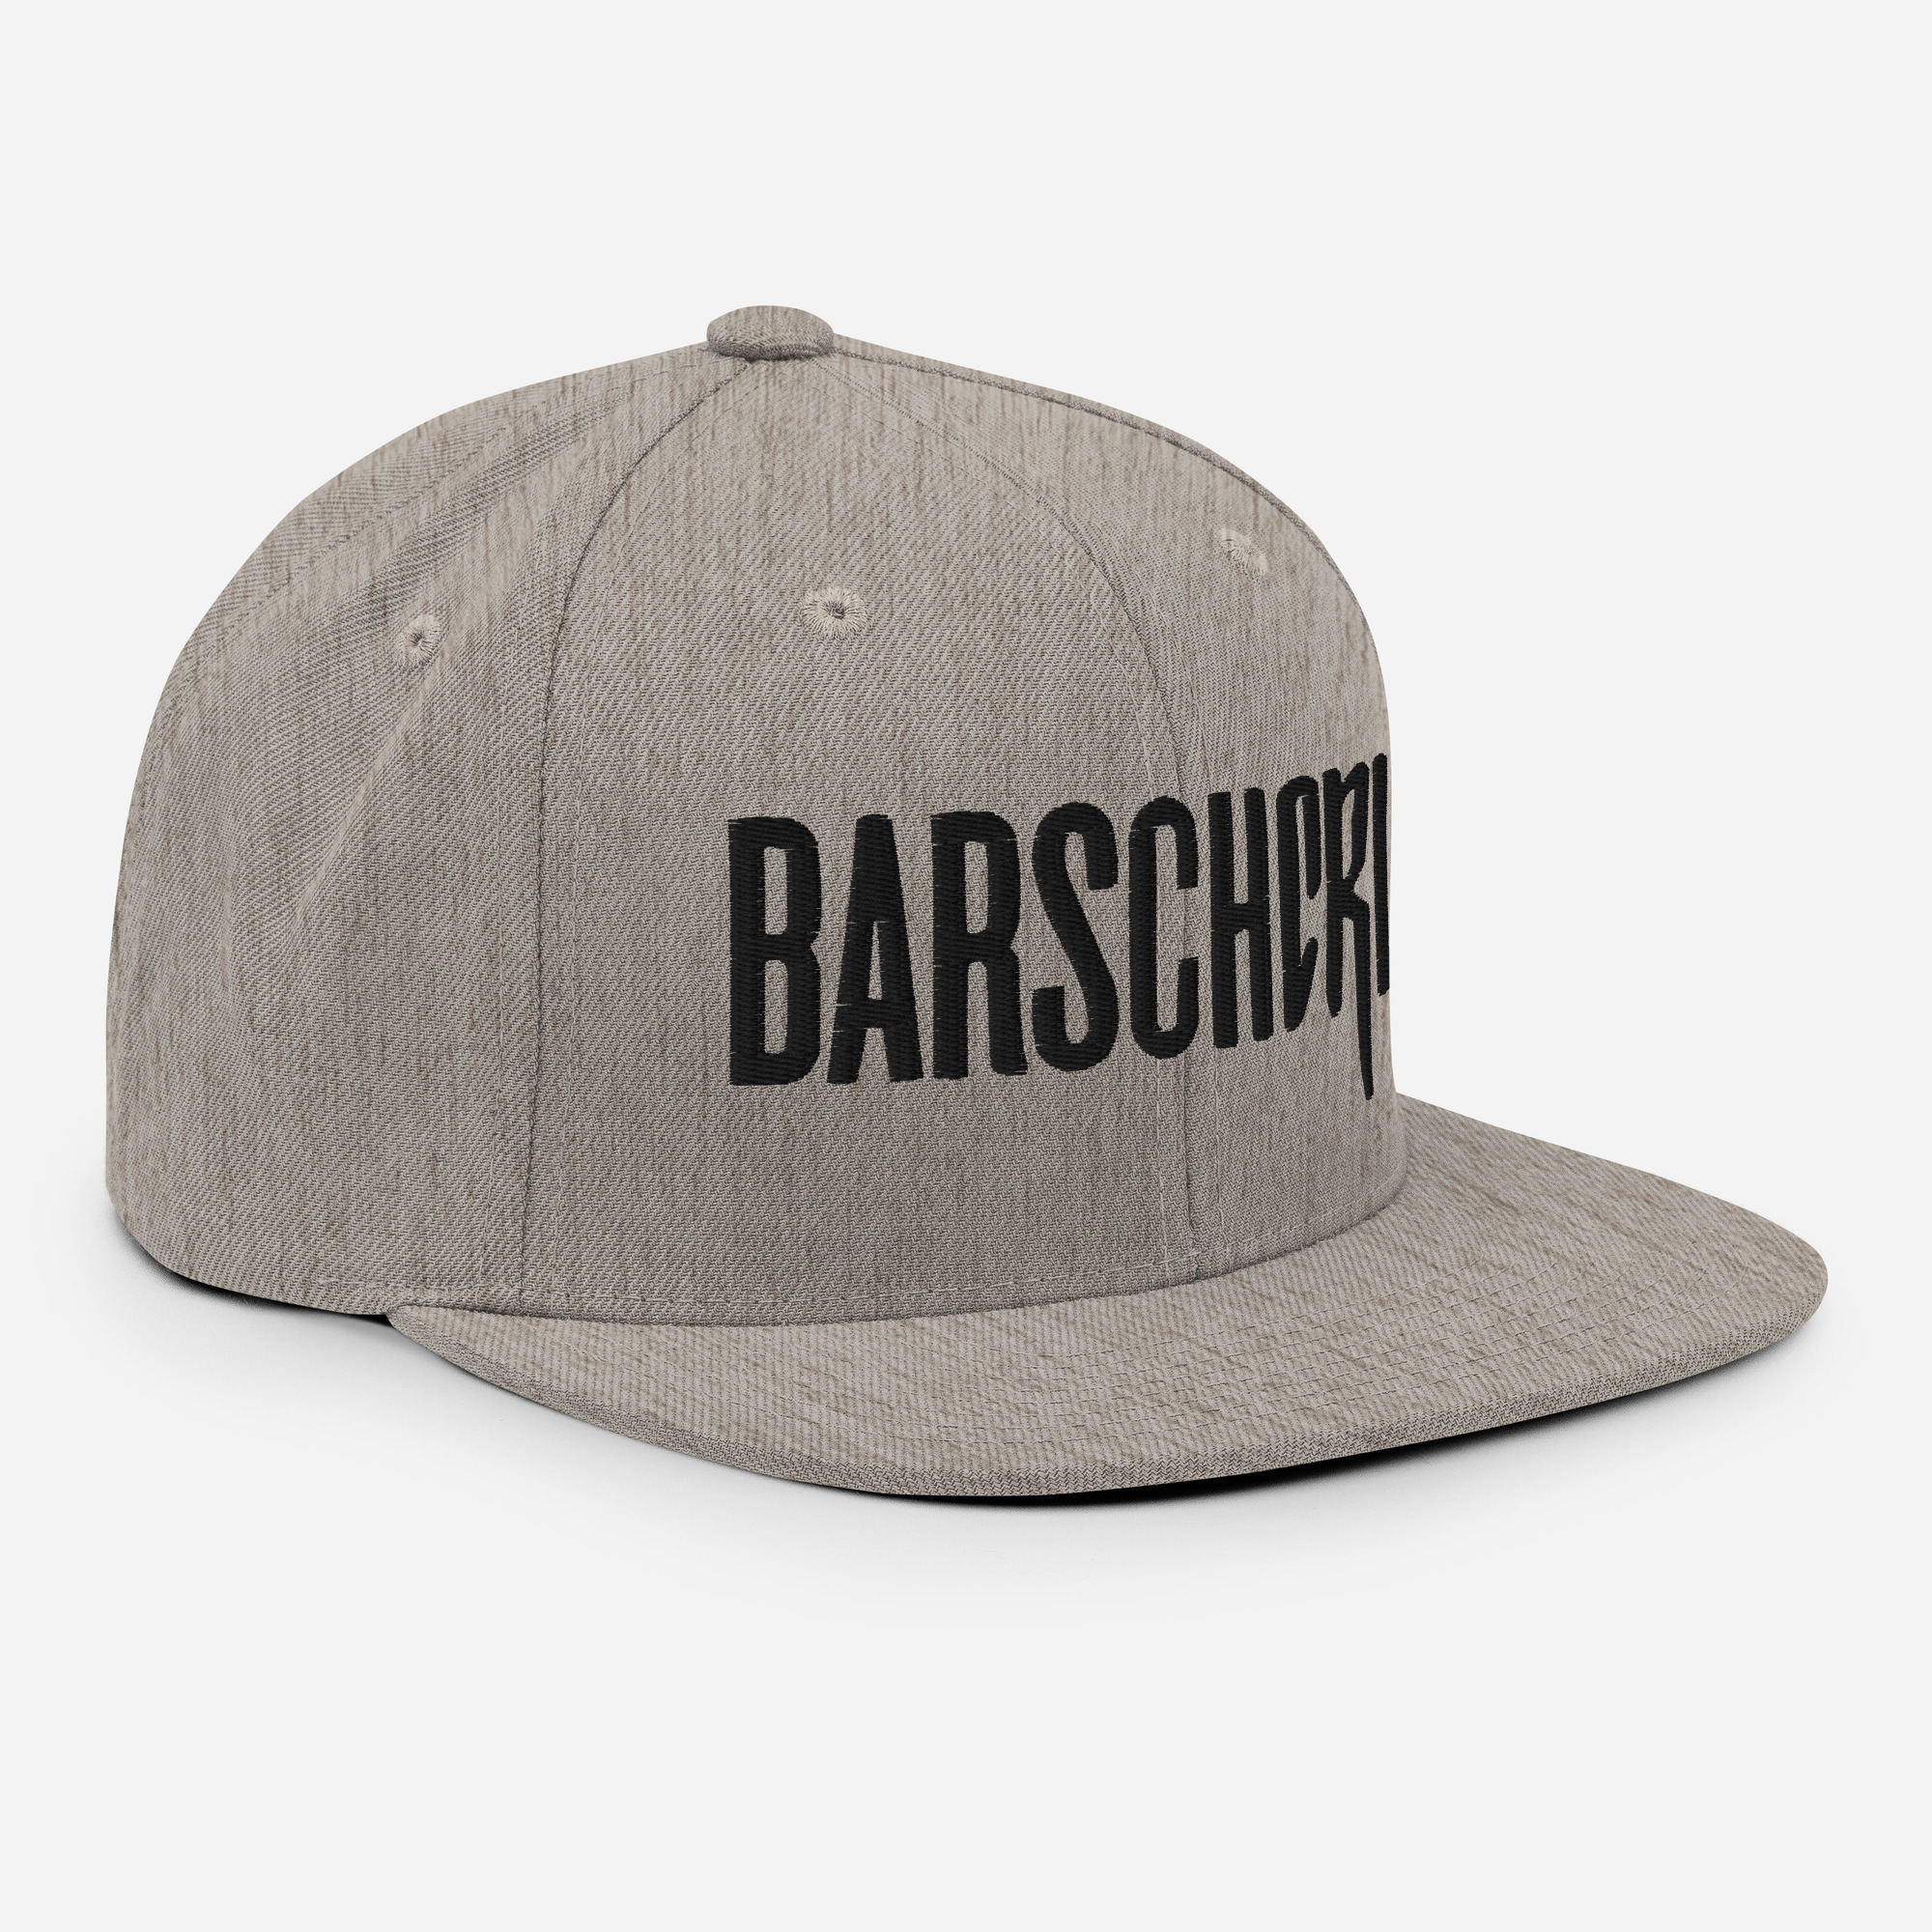 Barschcru bla Edition